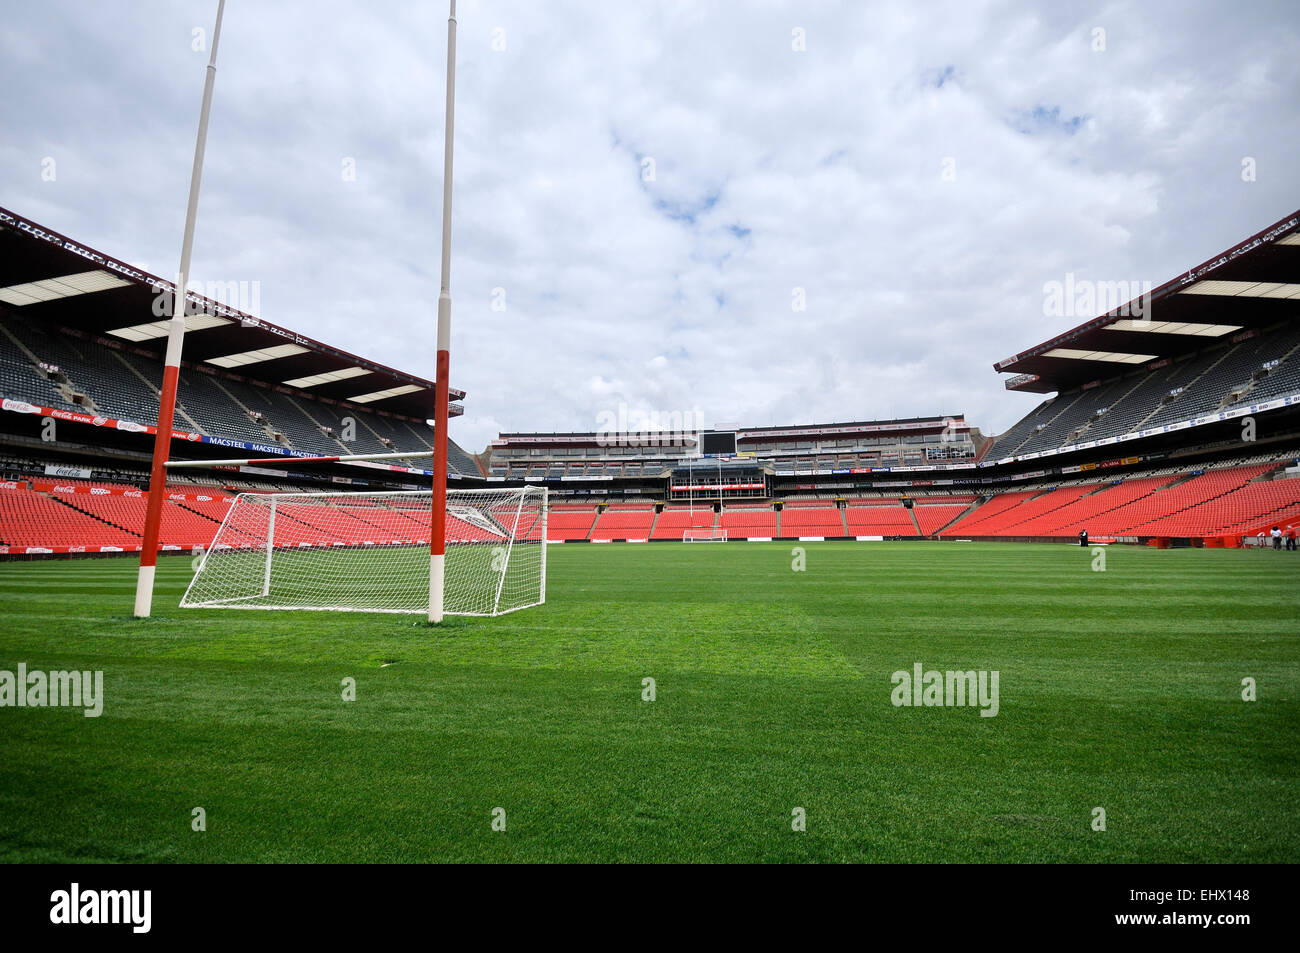 Africa, South Africa, Johannesburg, Ellis Park Stadium Stock Photo - Alamy